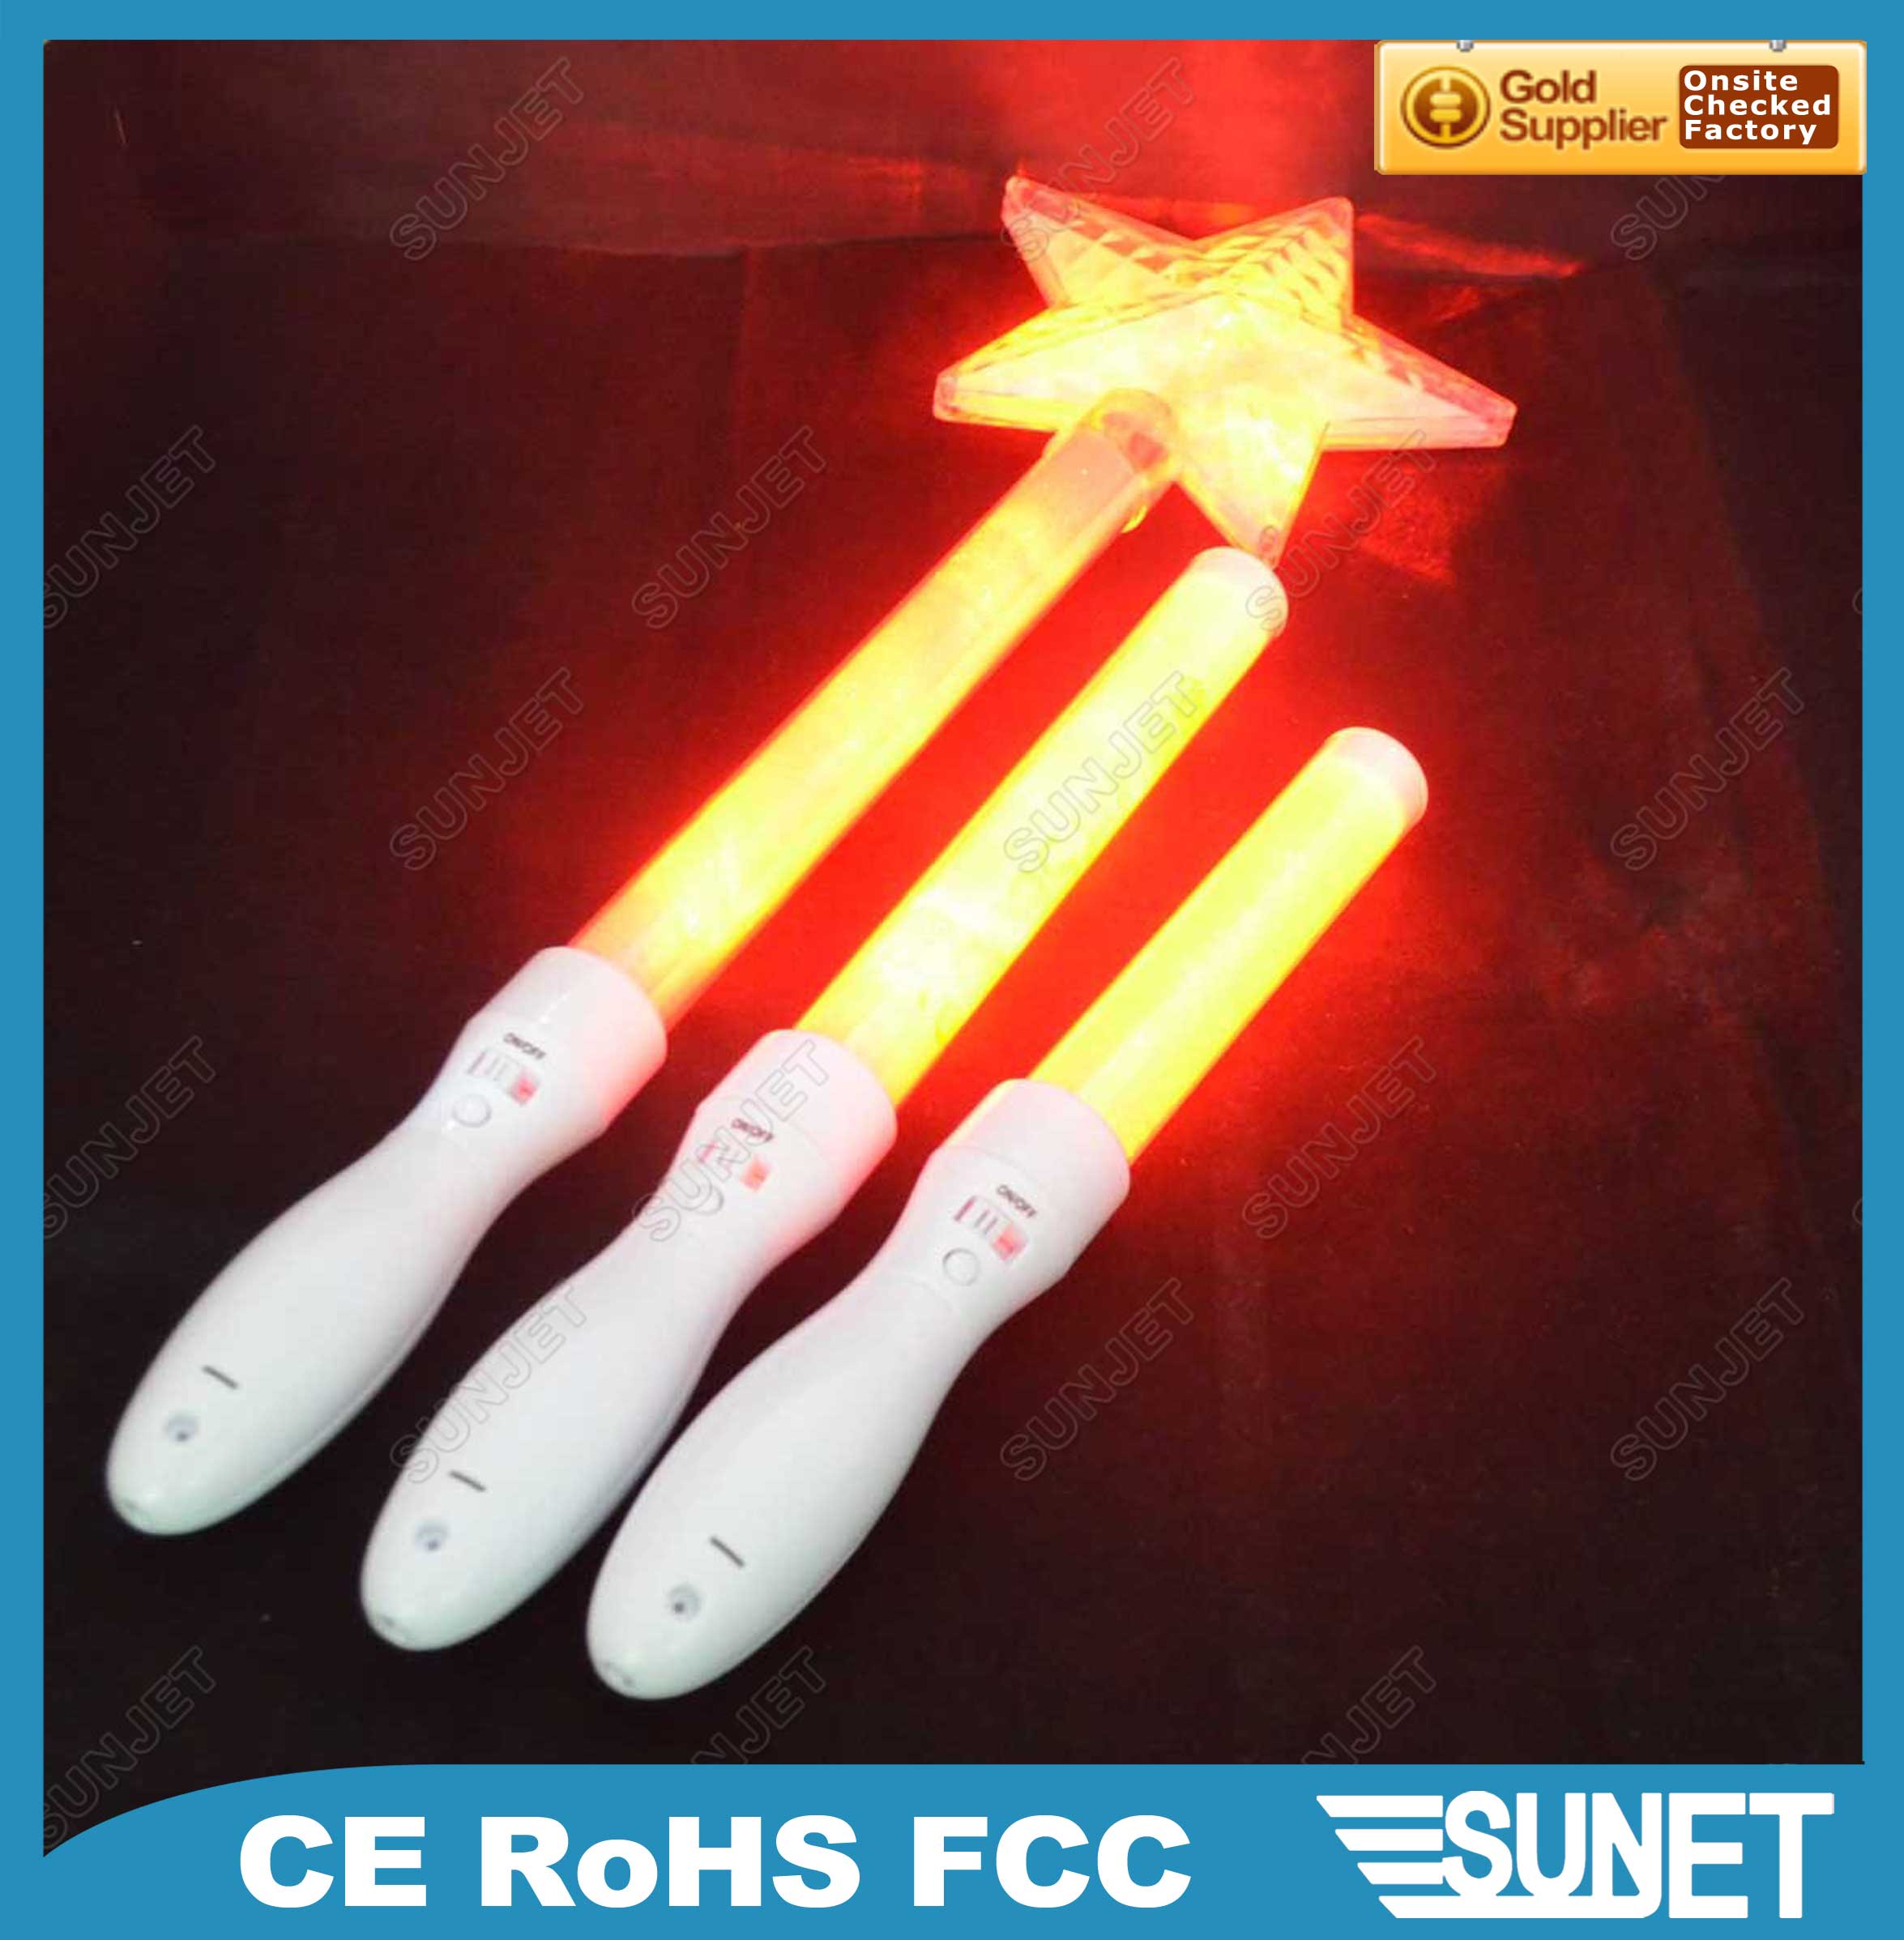 Sunjet printed plastic glow stick lollipop products,China Sunjet printed plastic glow stick